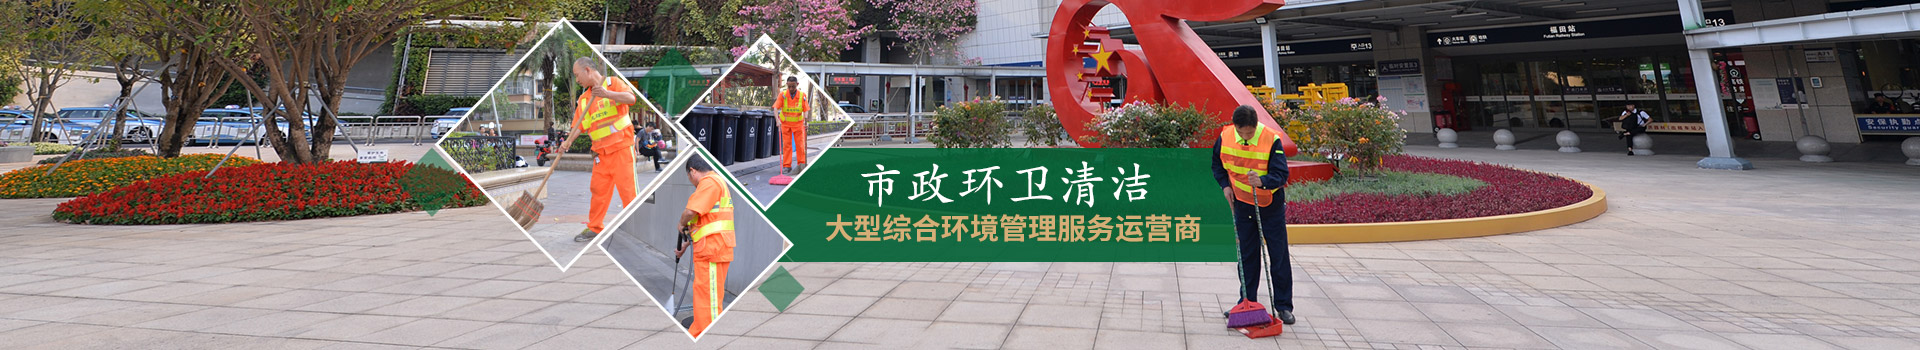 Manbetx万博亚洲官网-市政环卫清洁，大型综合环境管理服务运营商